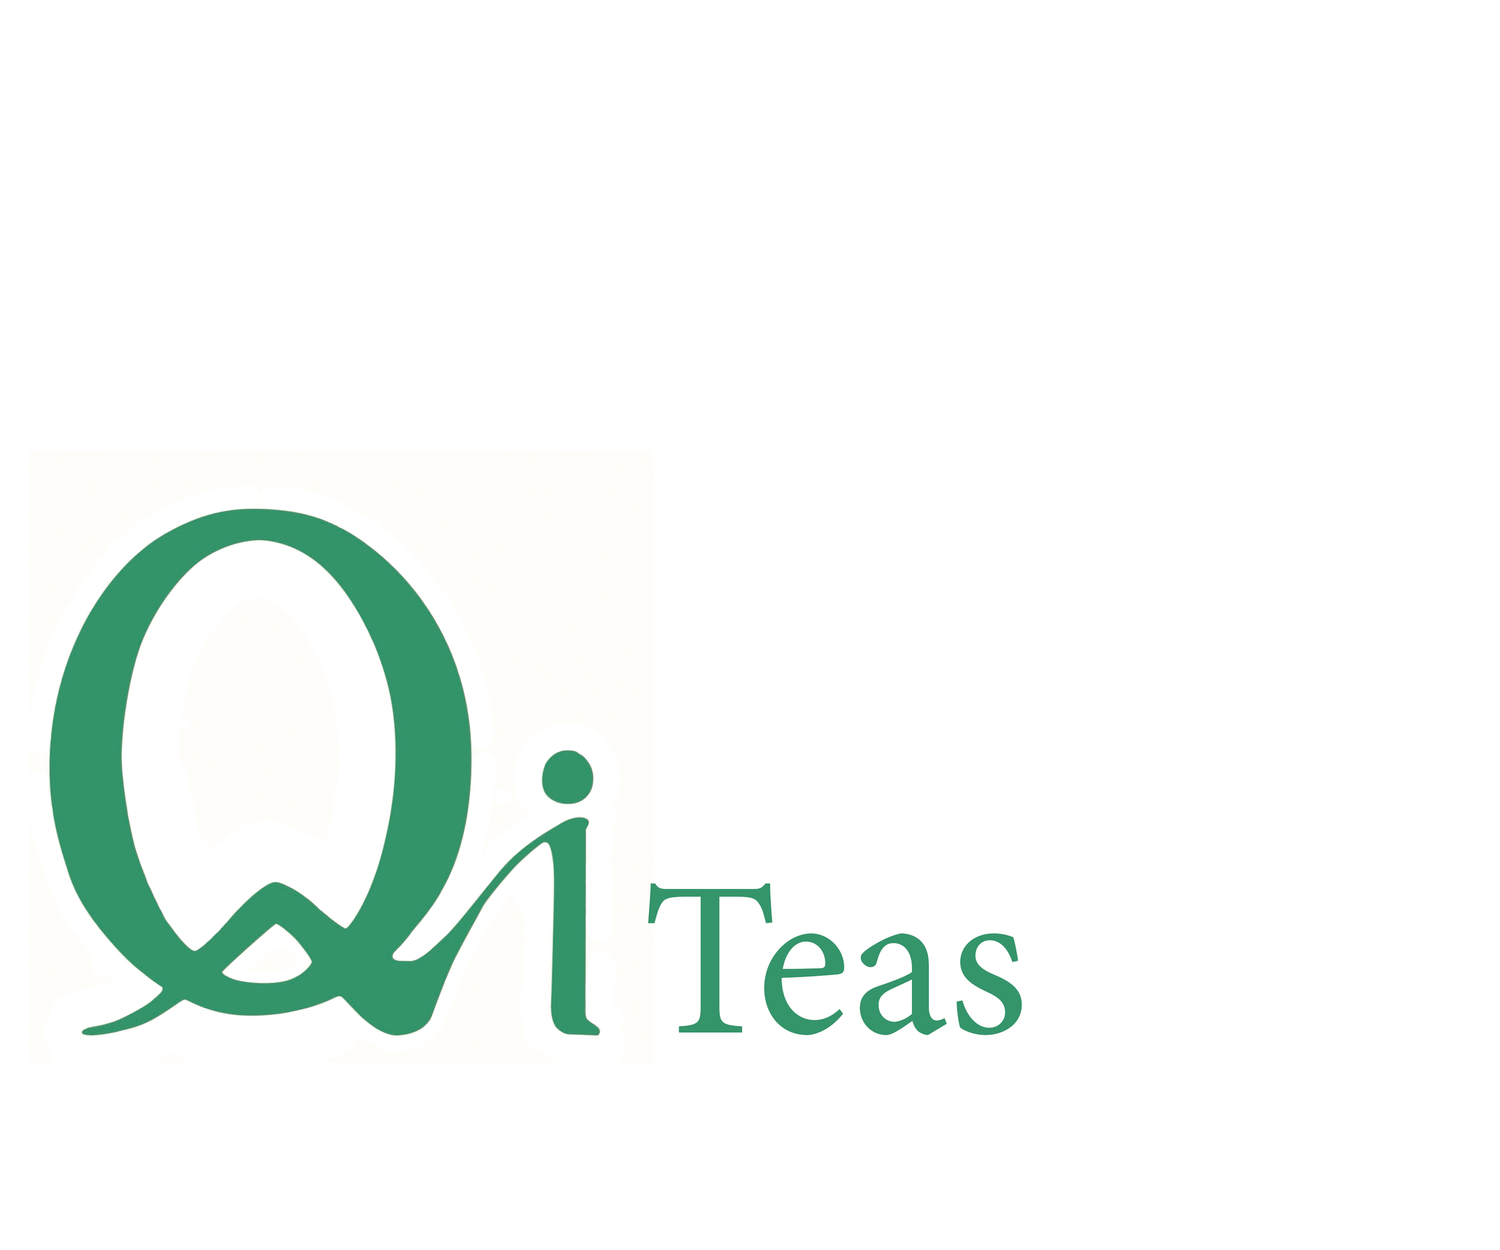 Qi Tea